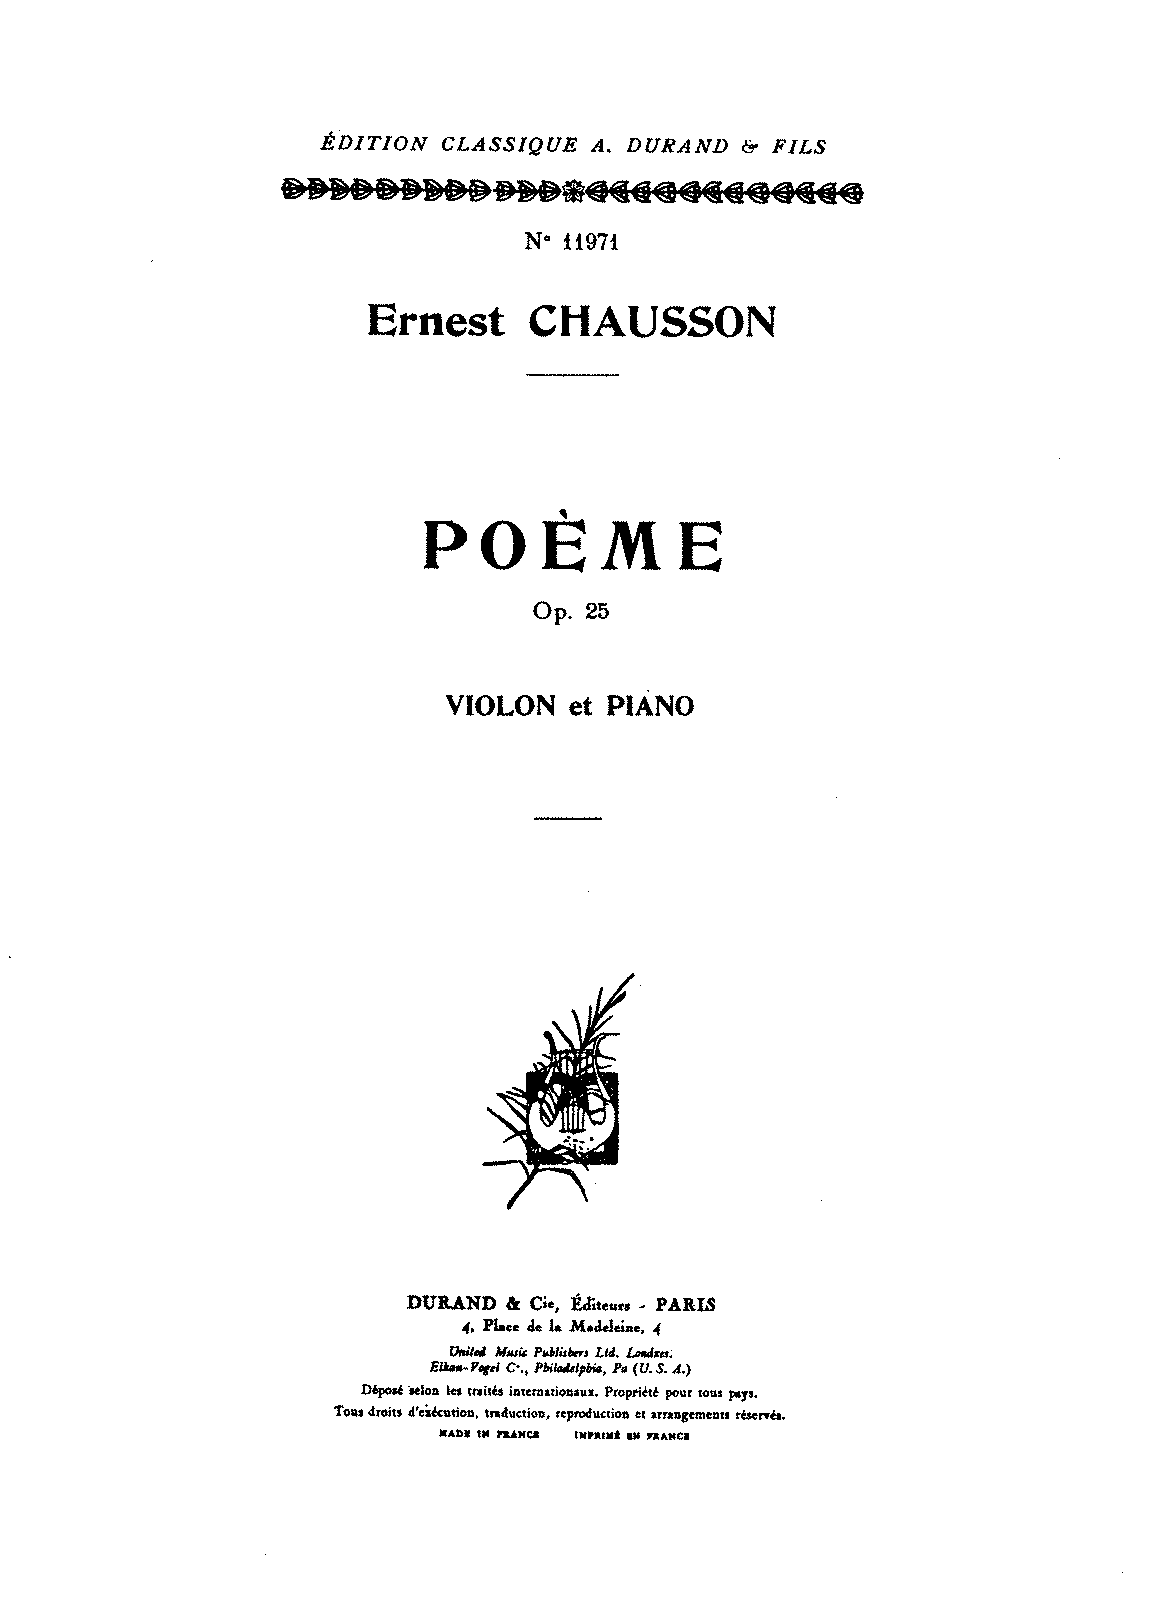 chausson poeme program notes